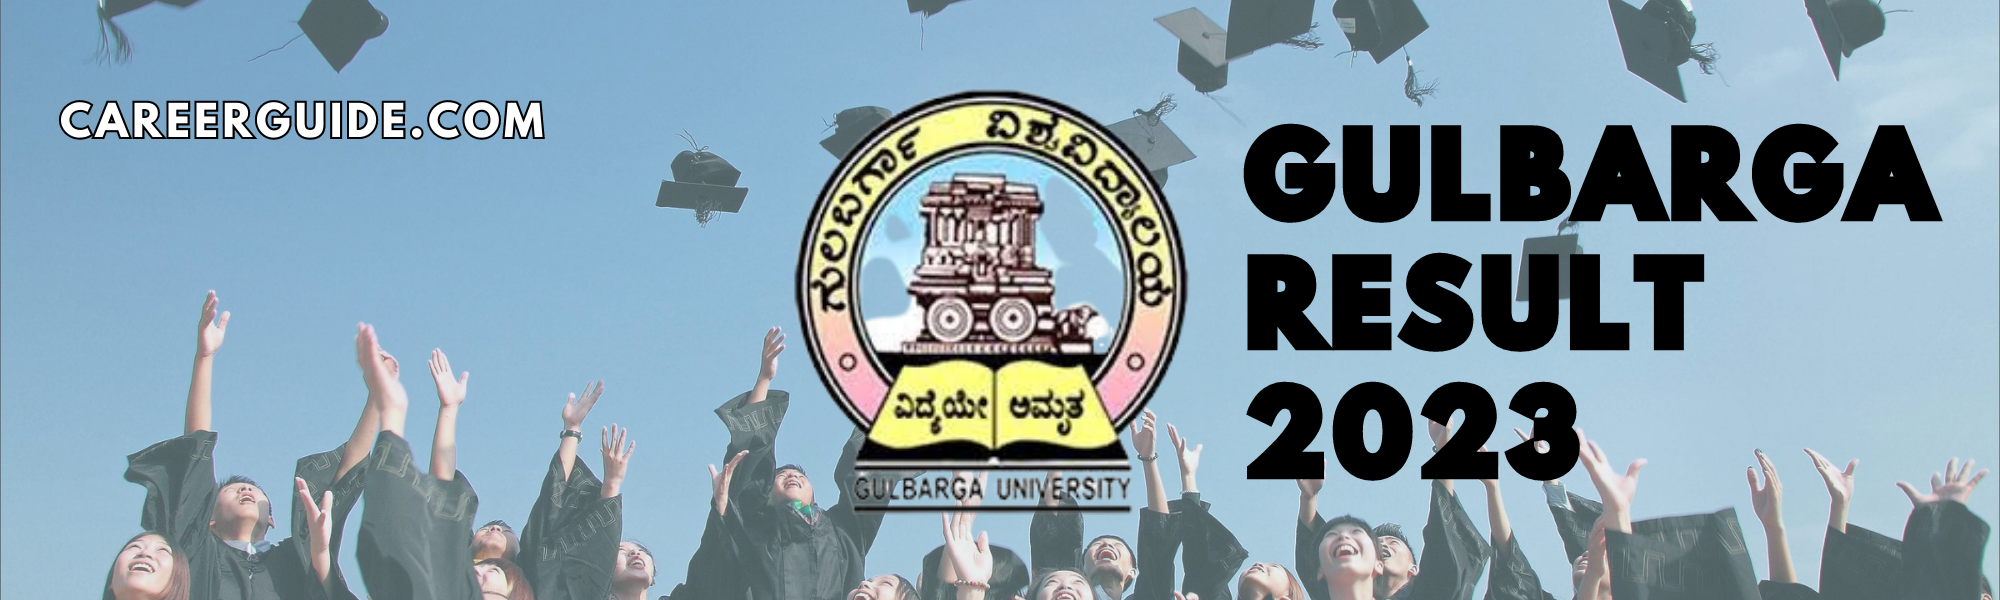 Gaulbarga University result 2023